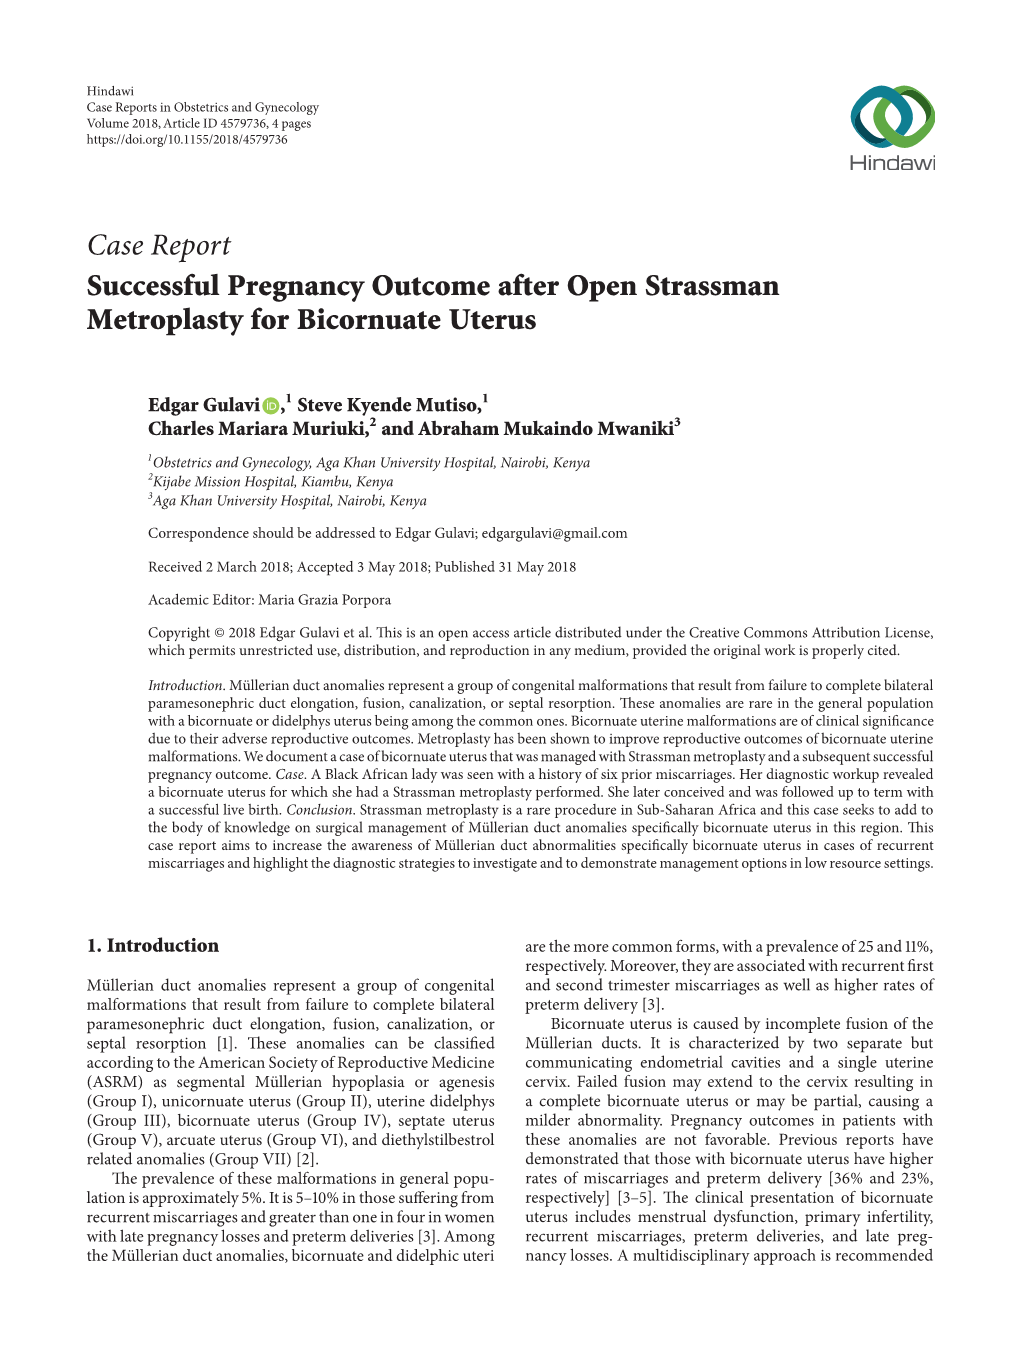 Case Report Successful Pregnancy Outcome After Open Strassman Metroplasty for Bicornuate Uterus